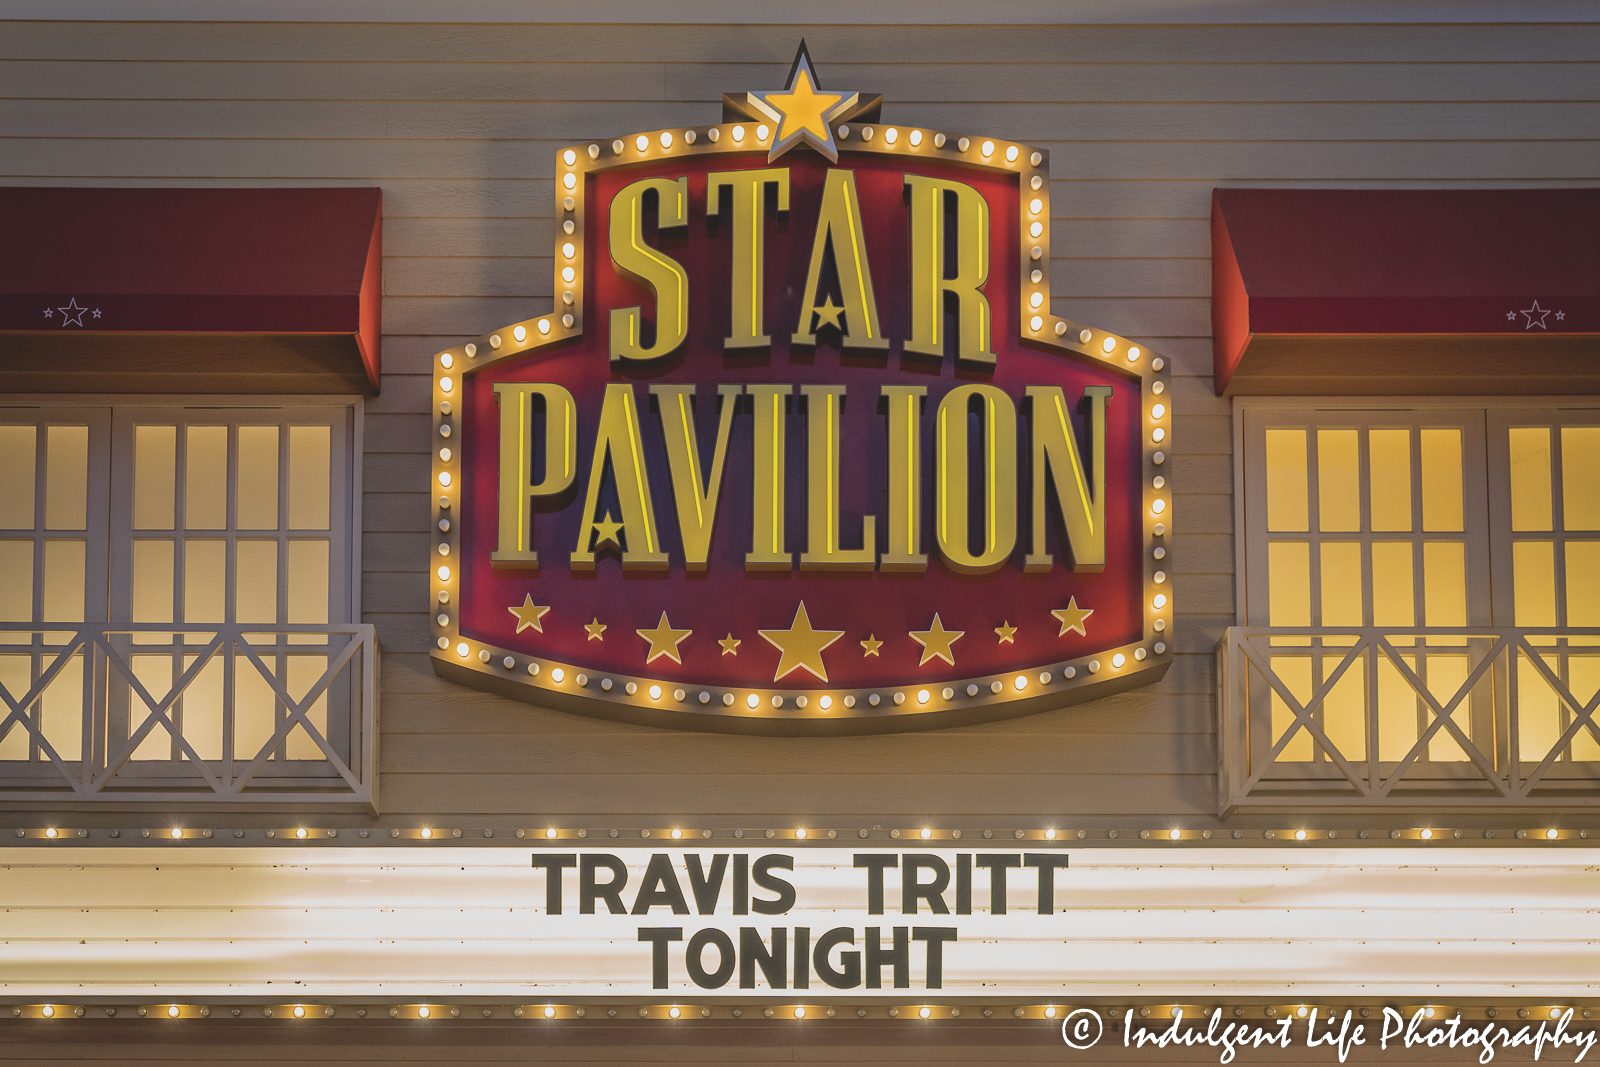 Star Pavilion marquee at Ameristar Casino in Kansas City, MO featuring Travis Tritt on December 3, 2021.